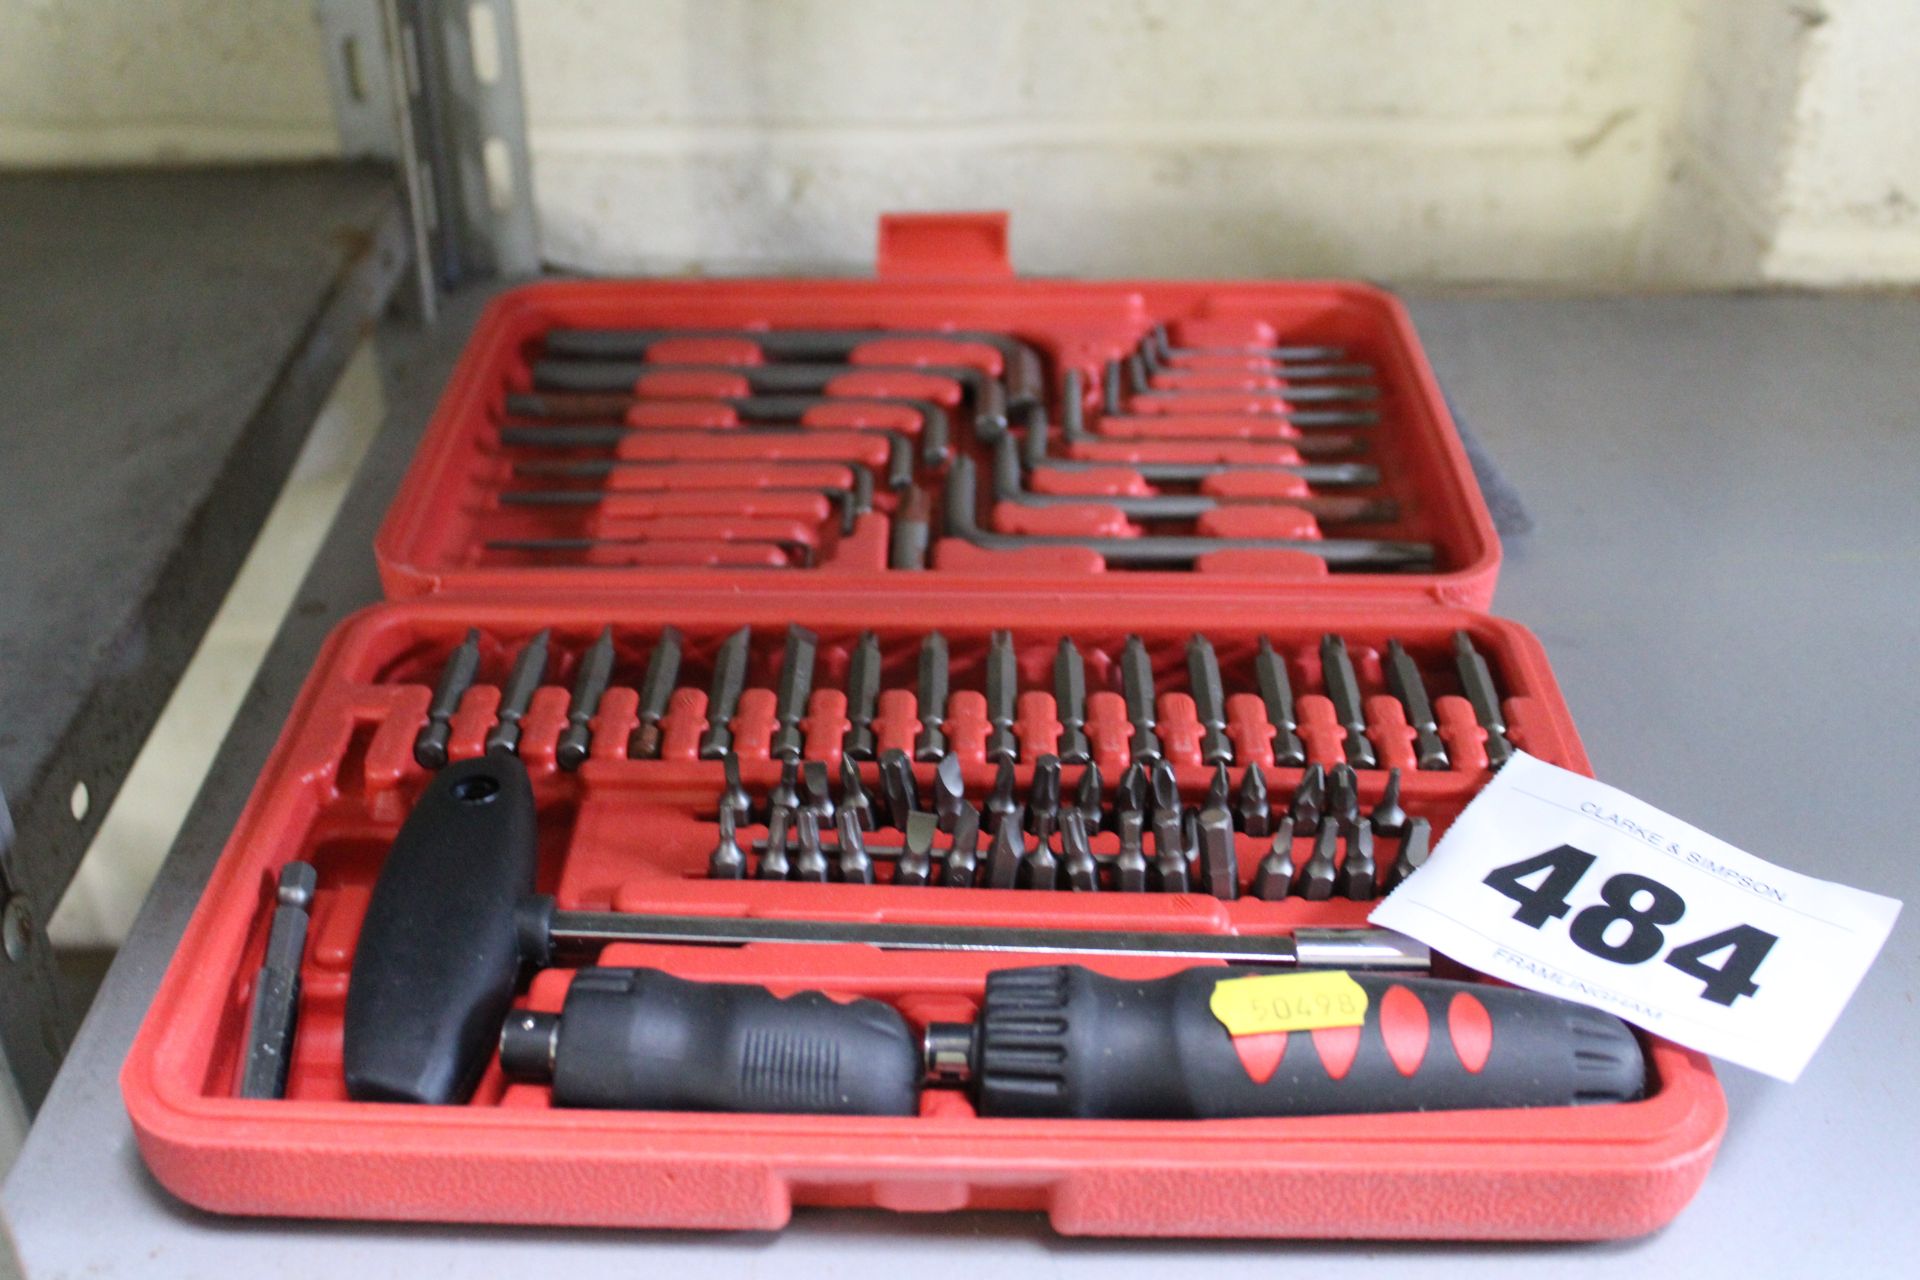 Allen key screwdriver set.